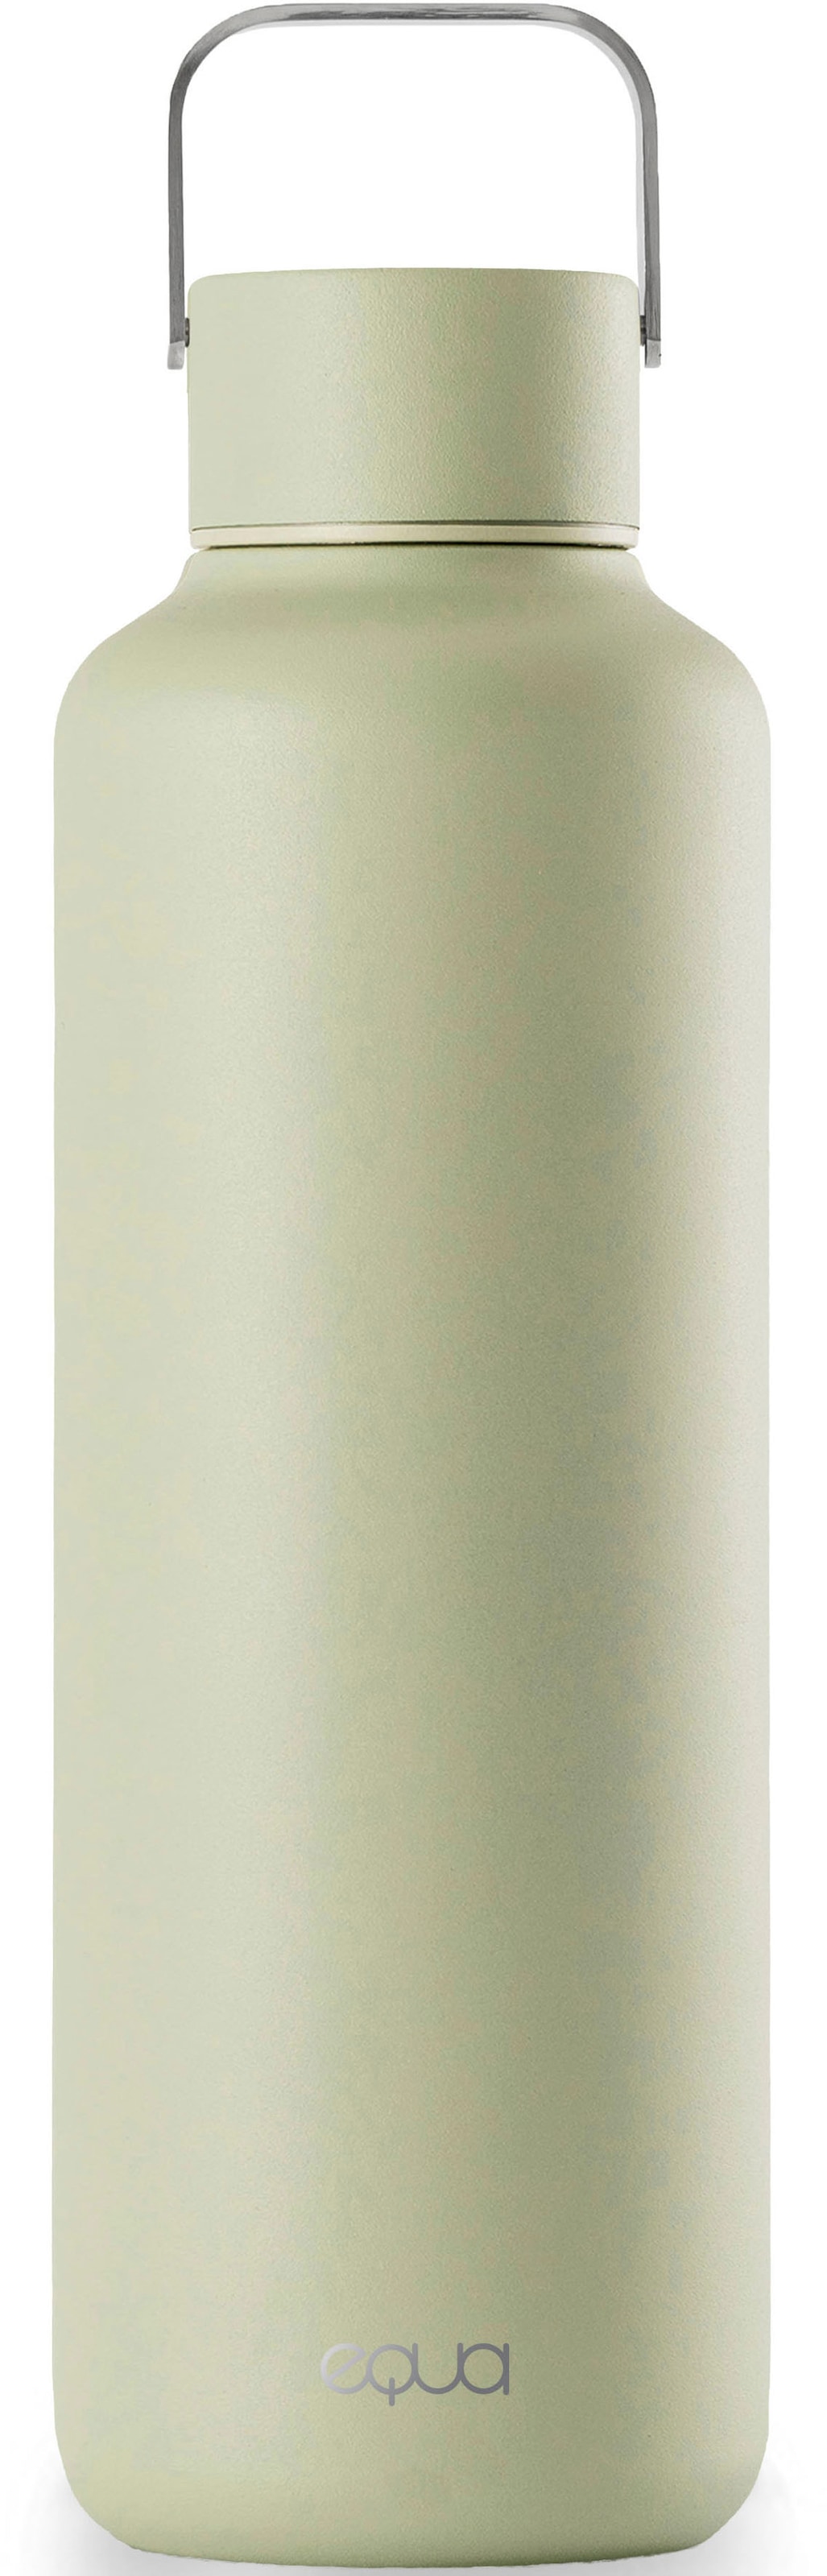 equa Isolierflasche »Timeless Matcha«, Edelstahl, doppelwandig, 600 ml